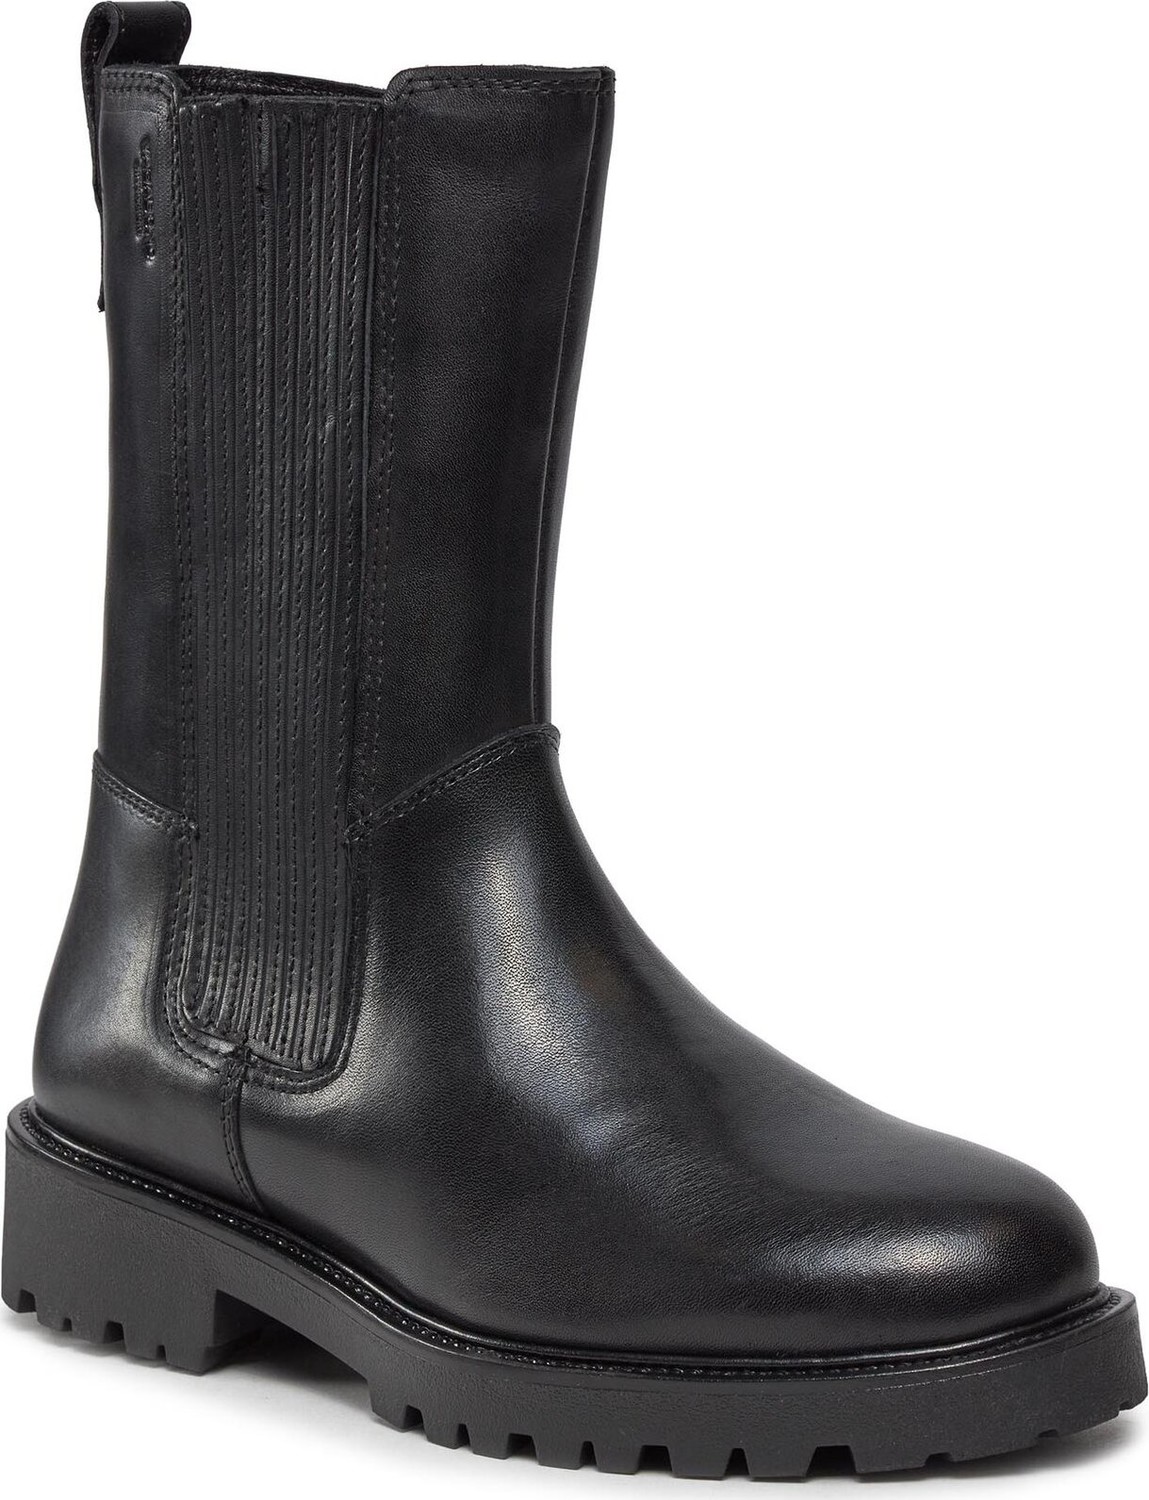 Kotníková obuv s elastickým prvkem Vagabond 5257-101-20 Black